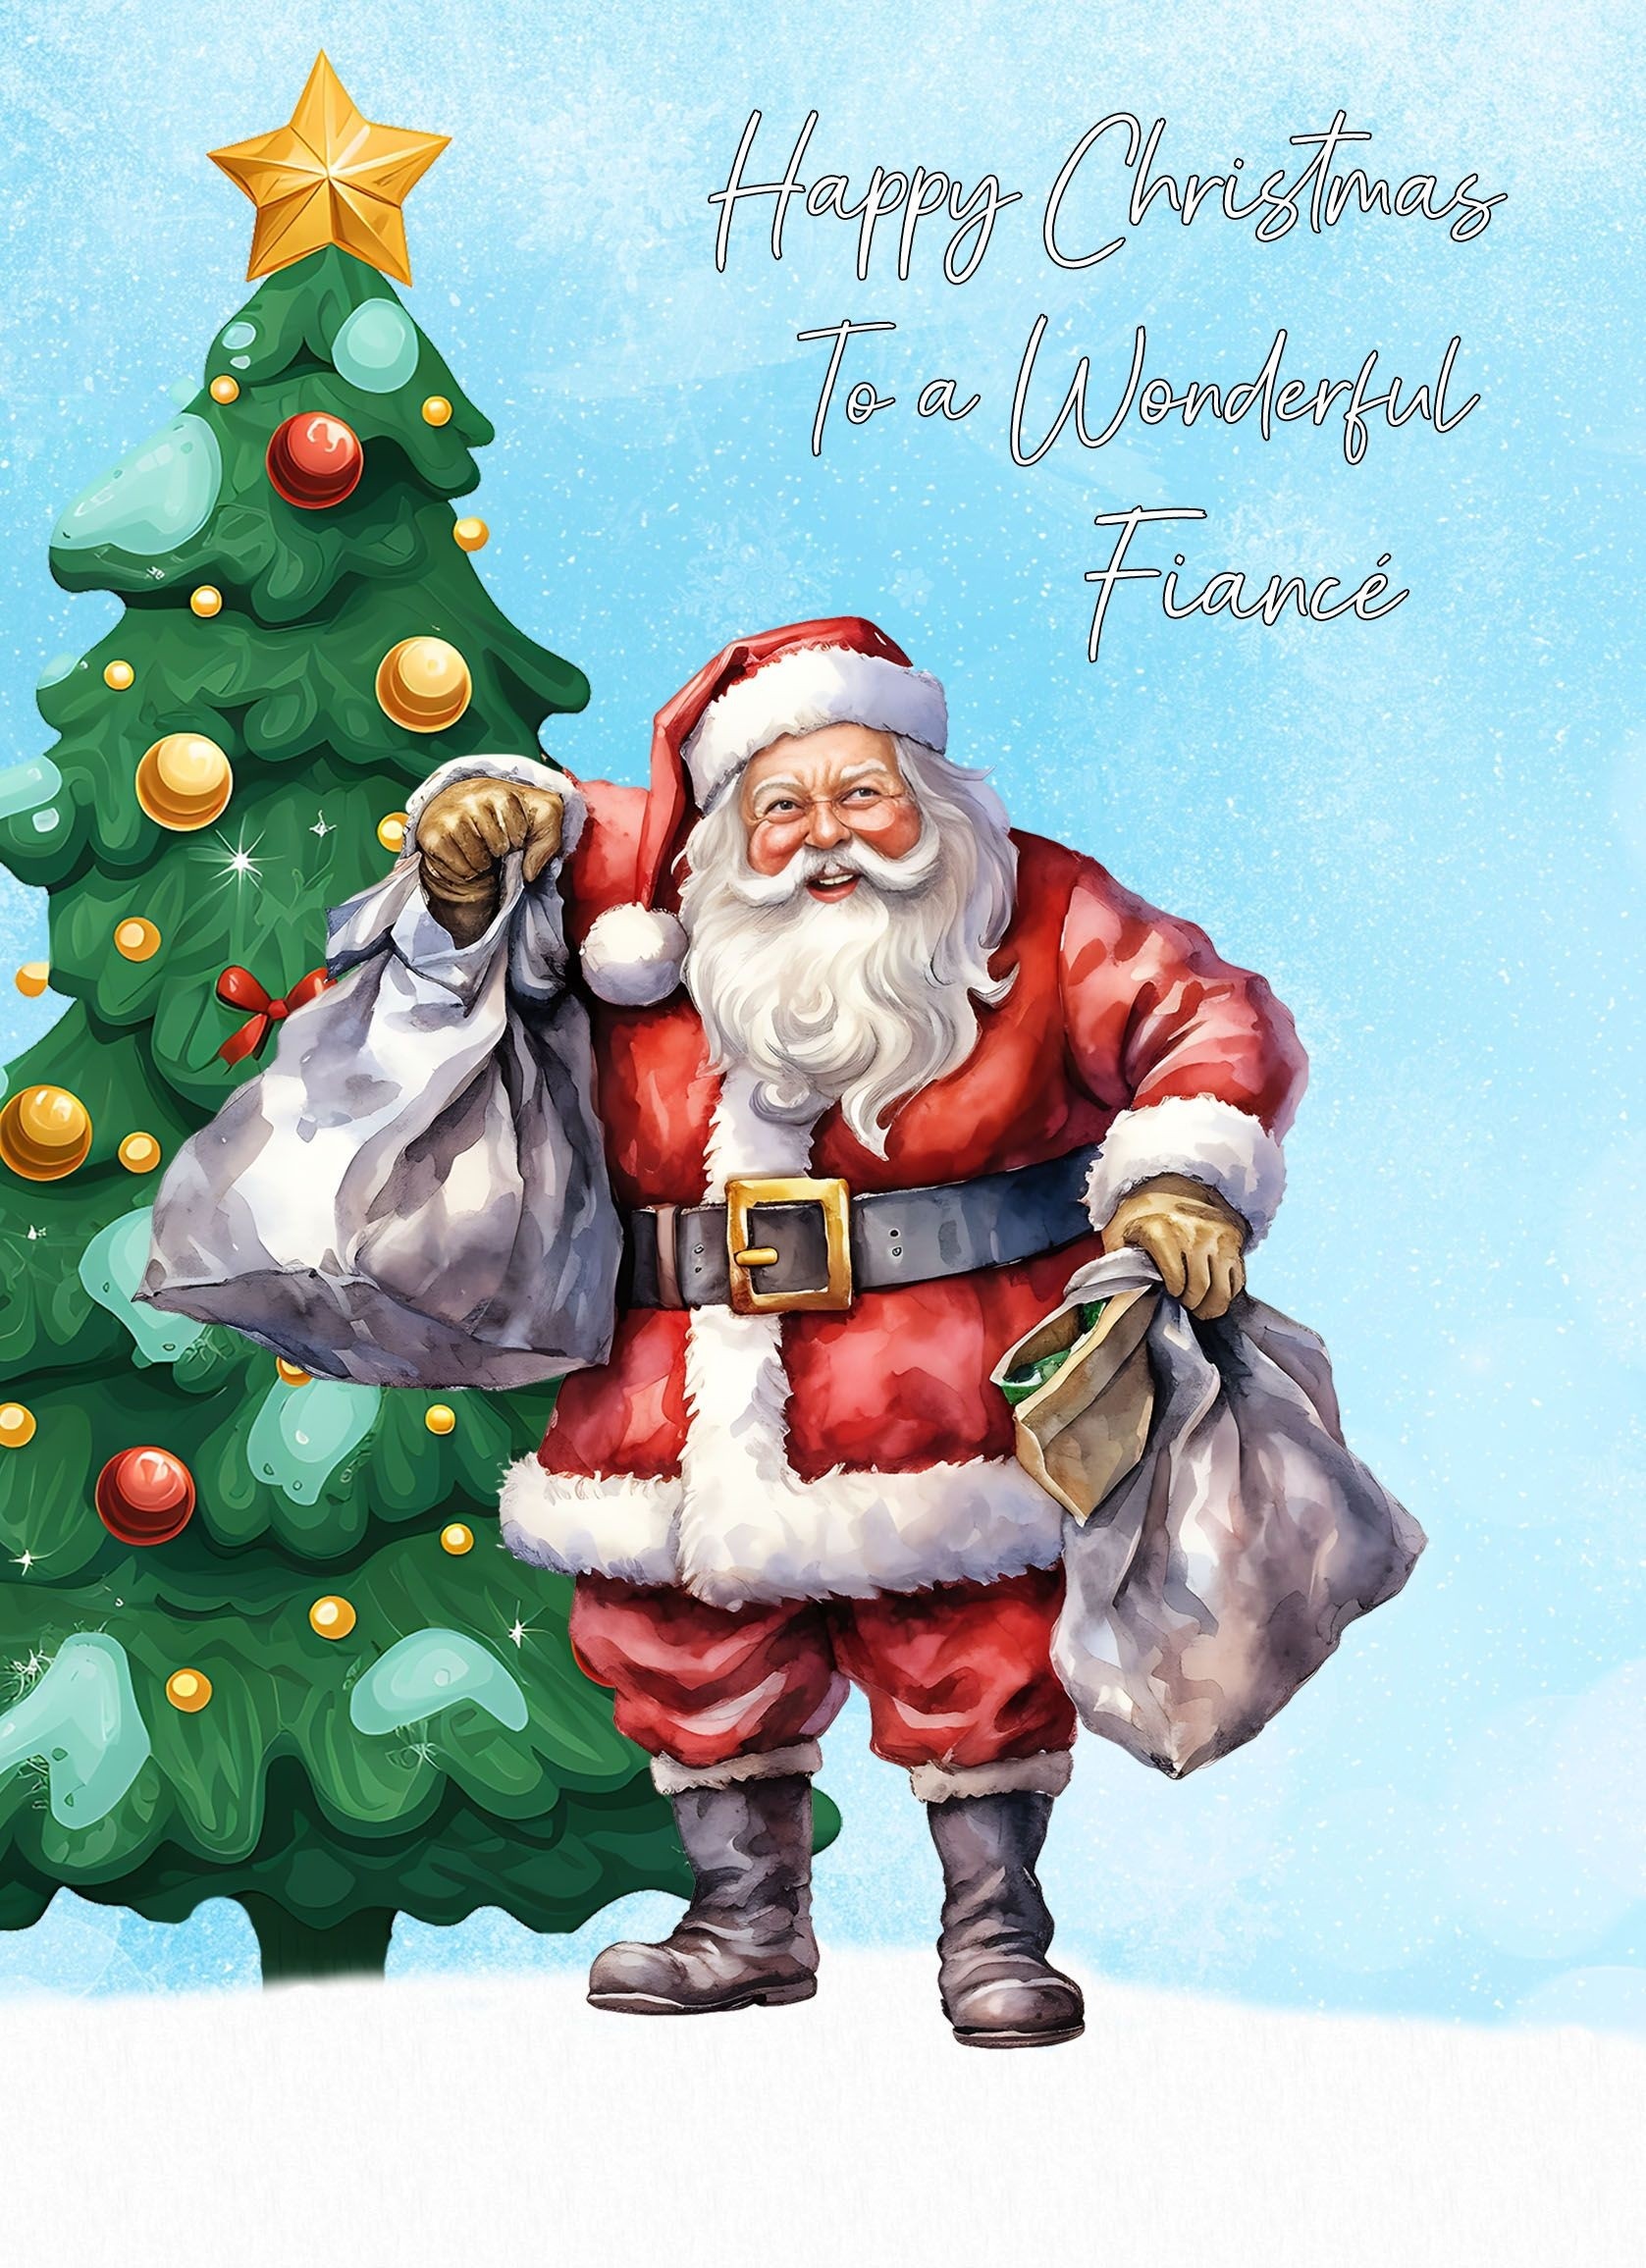 Christmas Card For Fiance (Blue, Santa Claus)